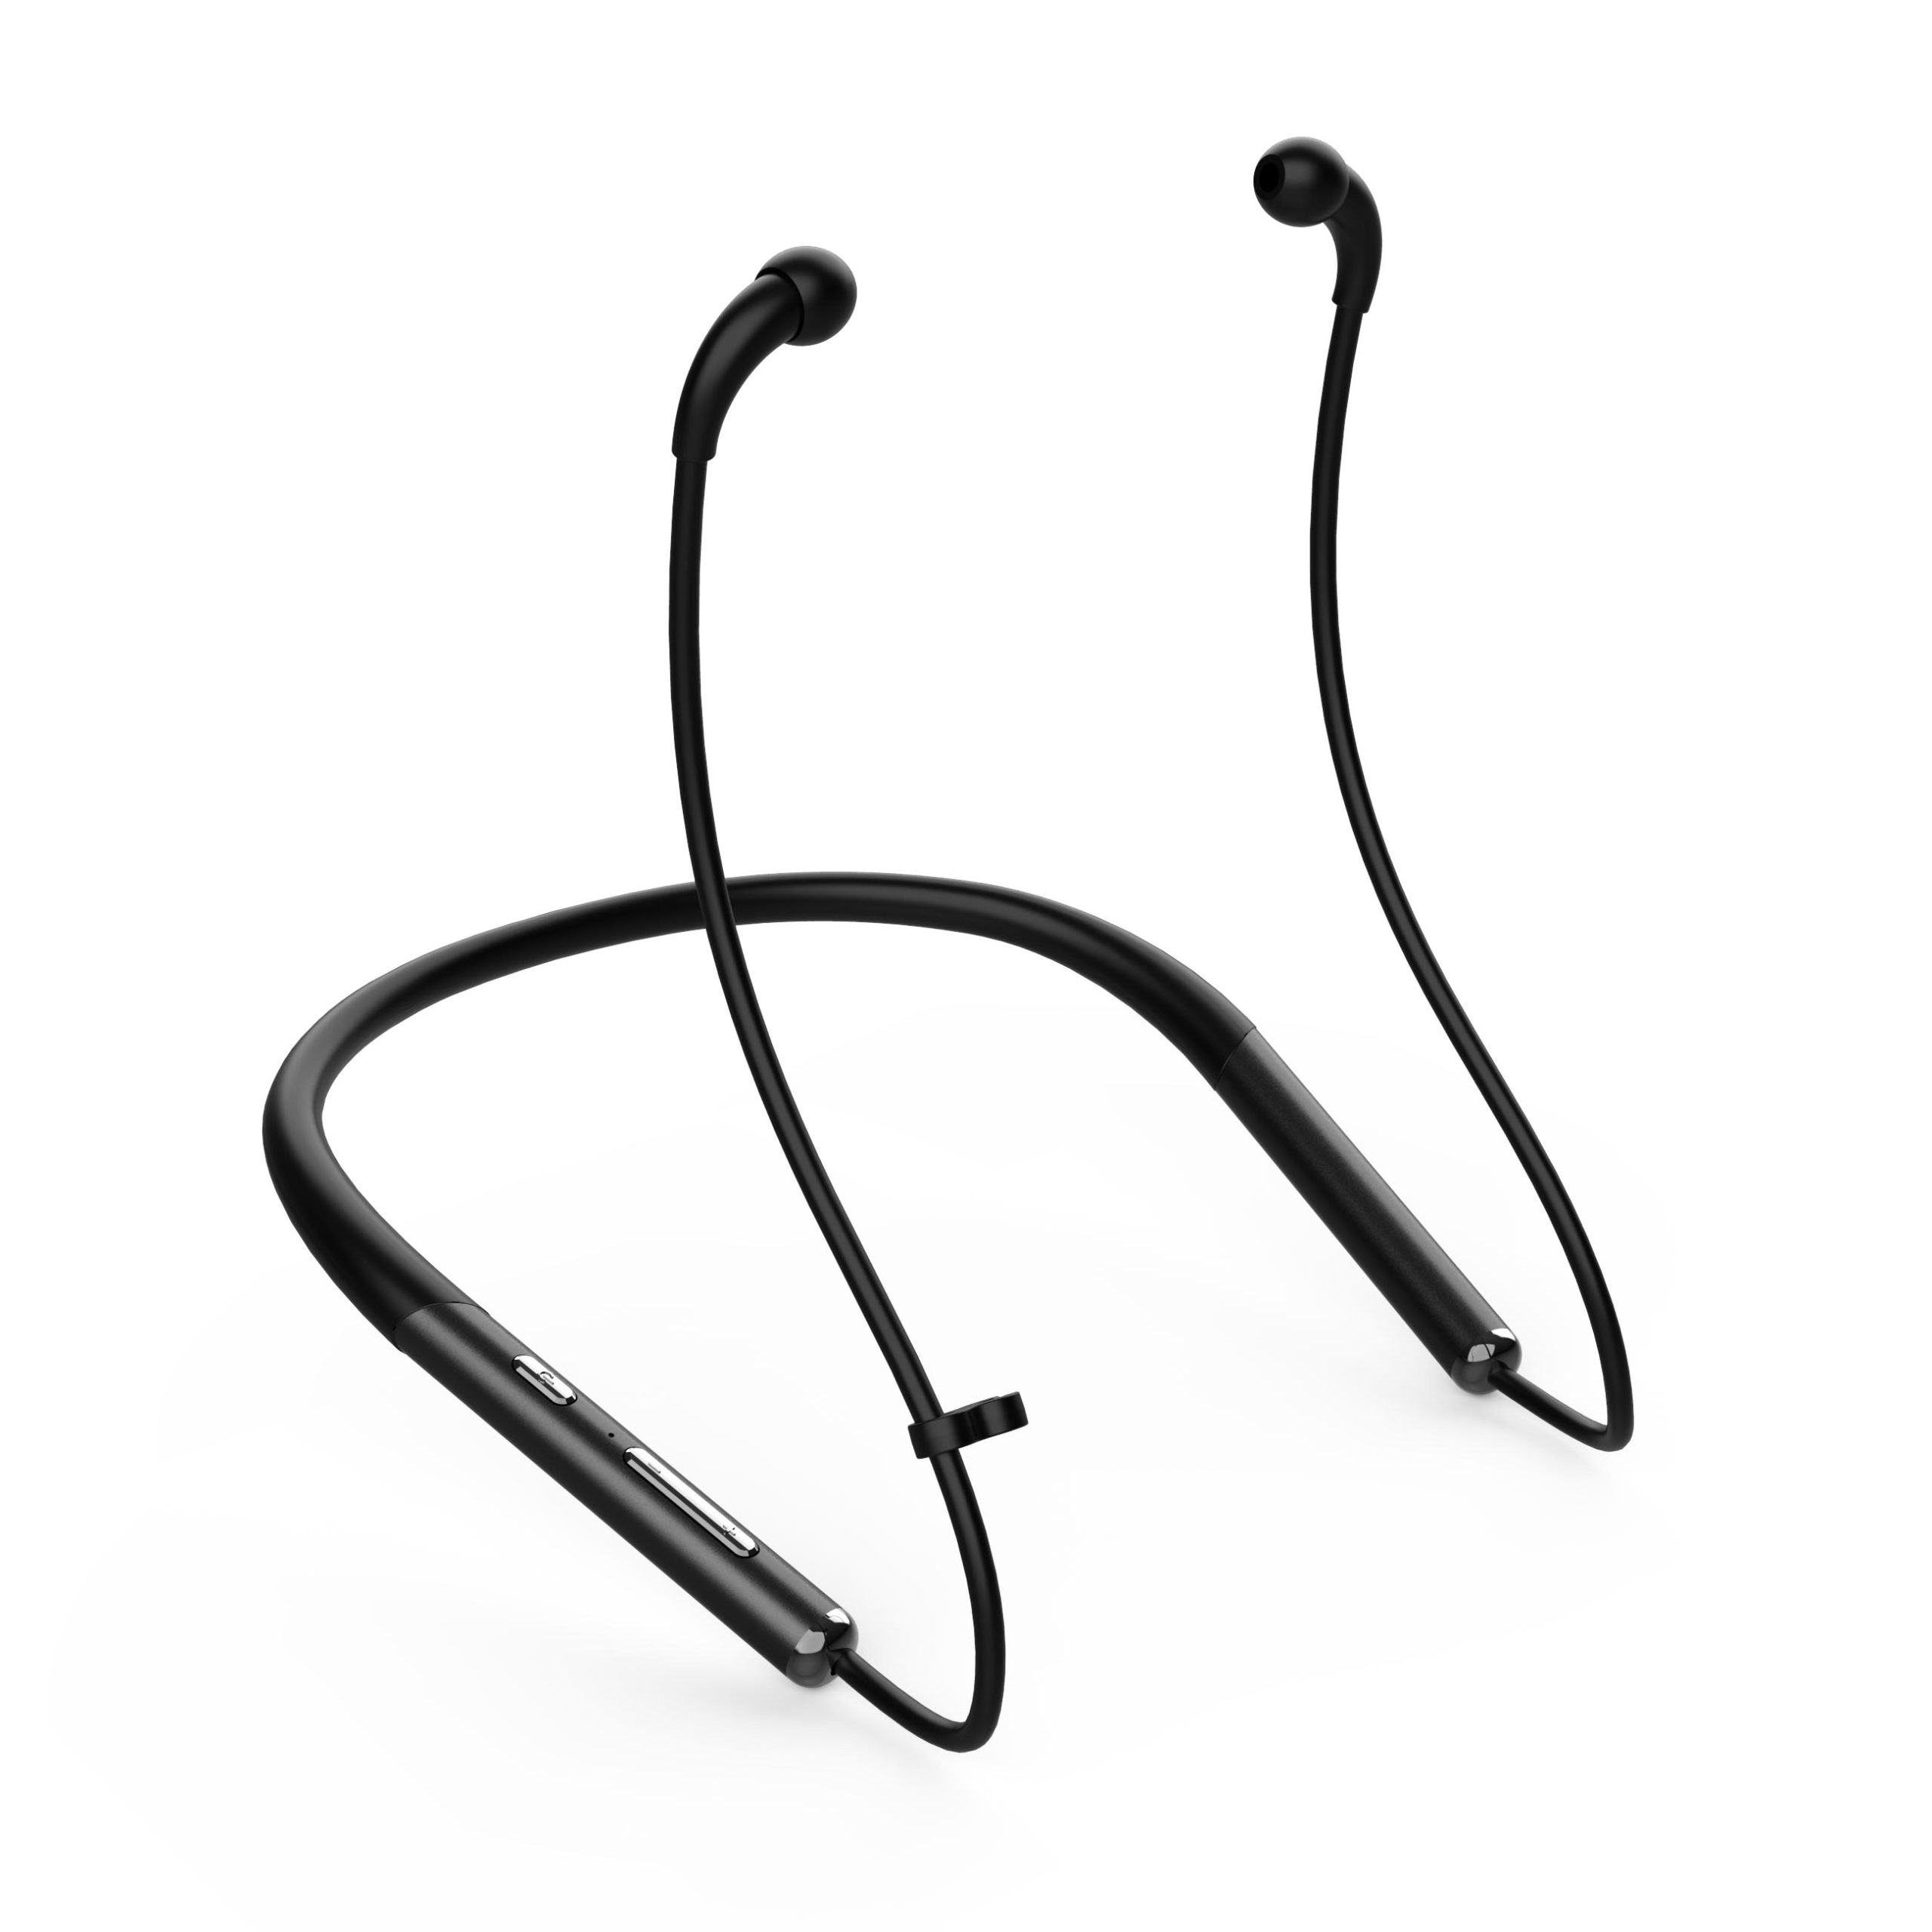 EMF FREE - Wireless Bluetooth Neck Mount Headphones/Headsets Air